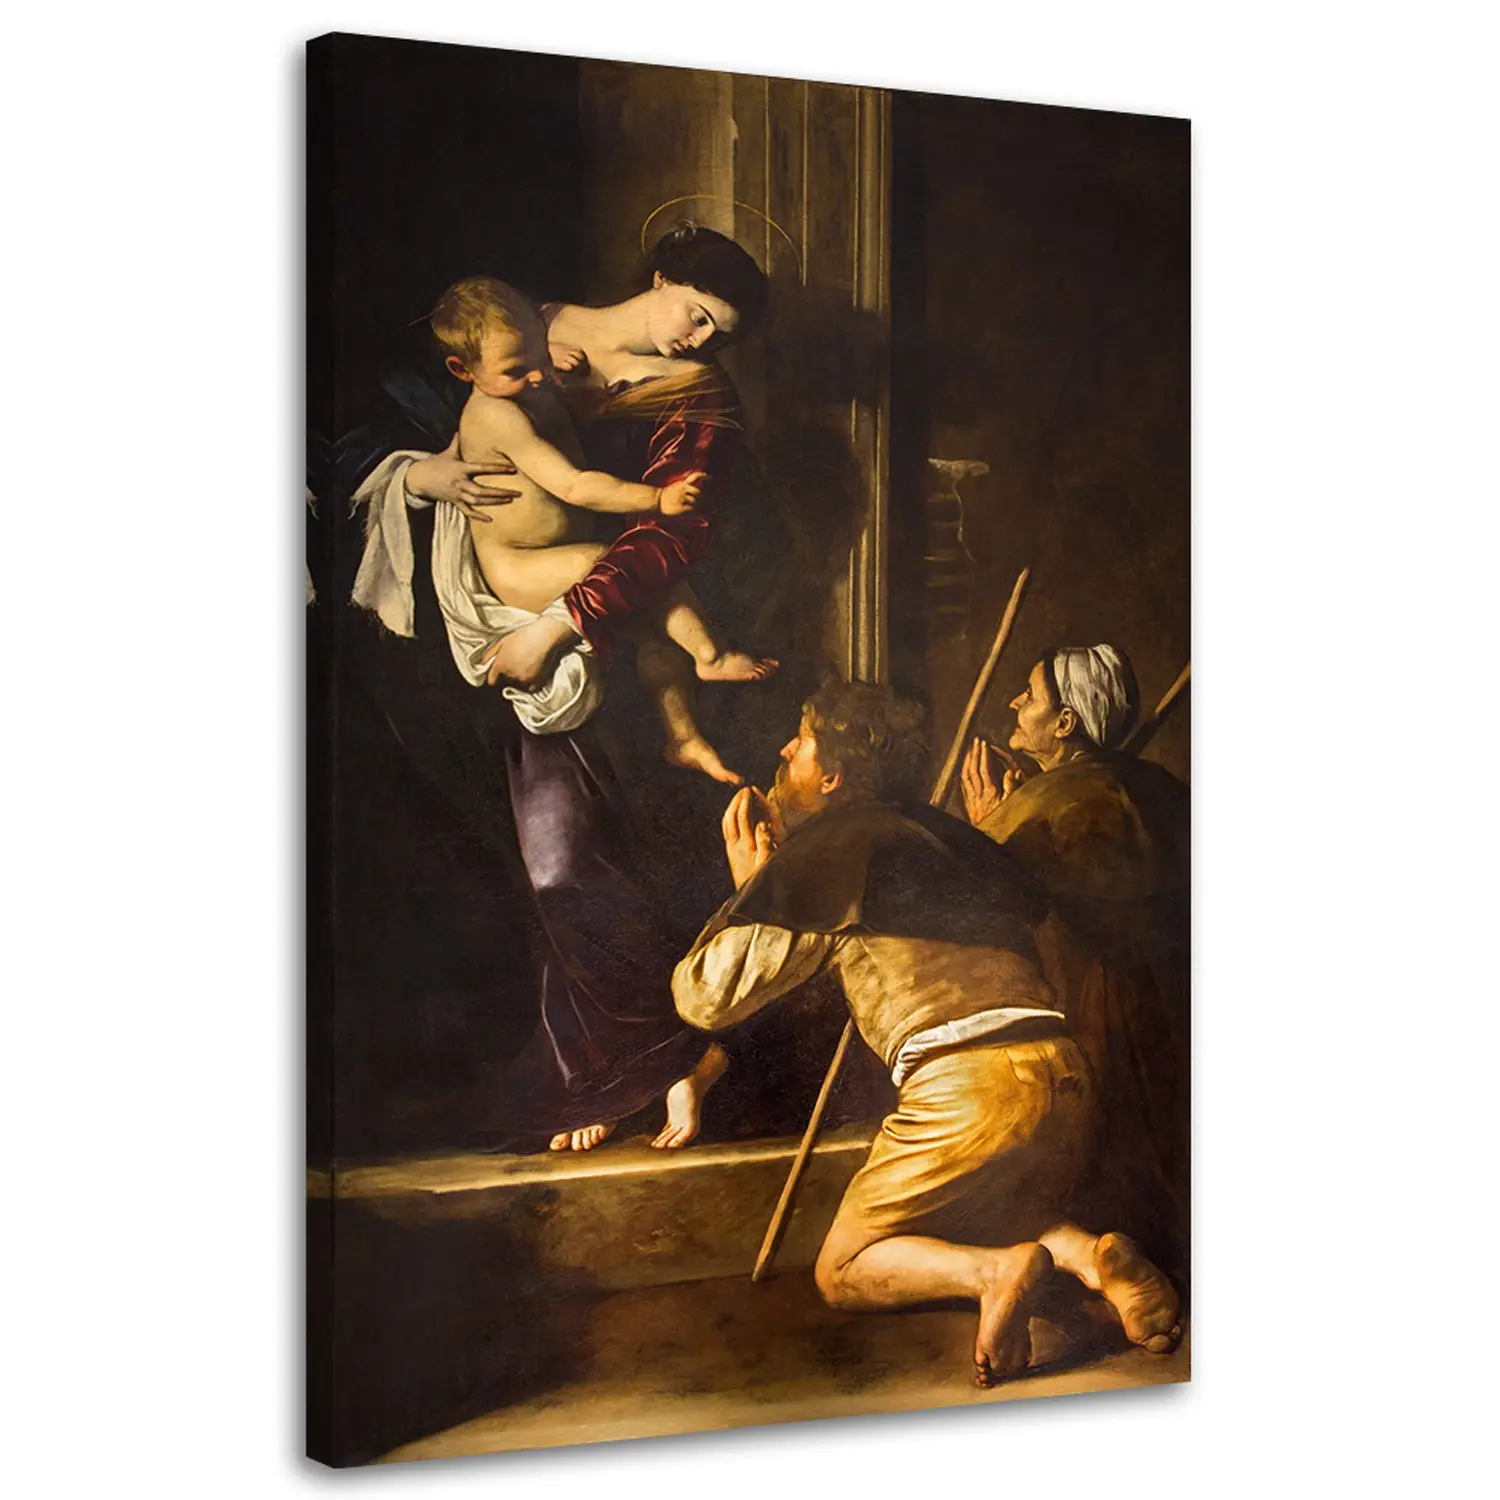 Caravaggio Wandbild Madonna von Loreto